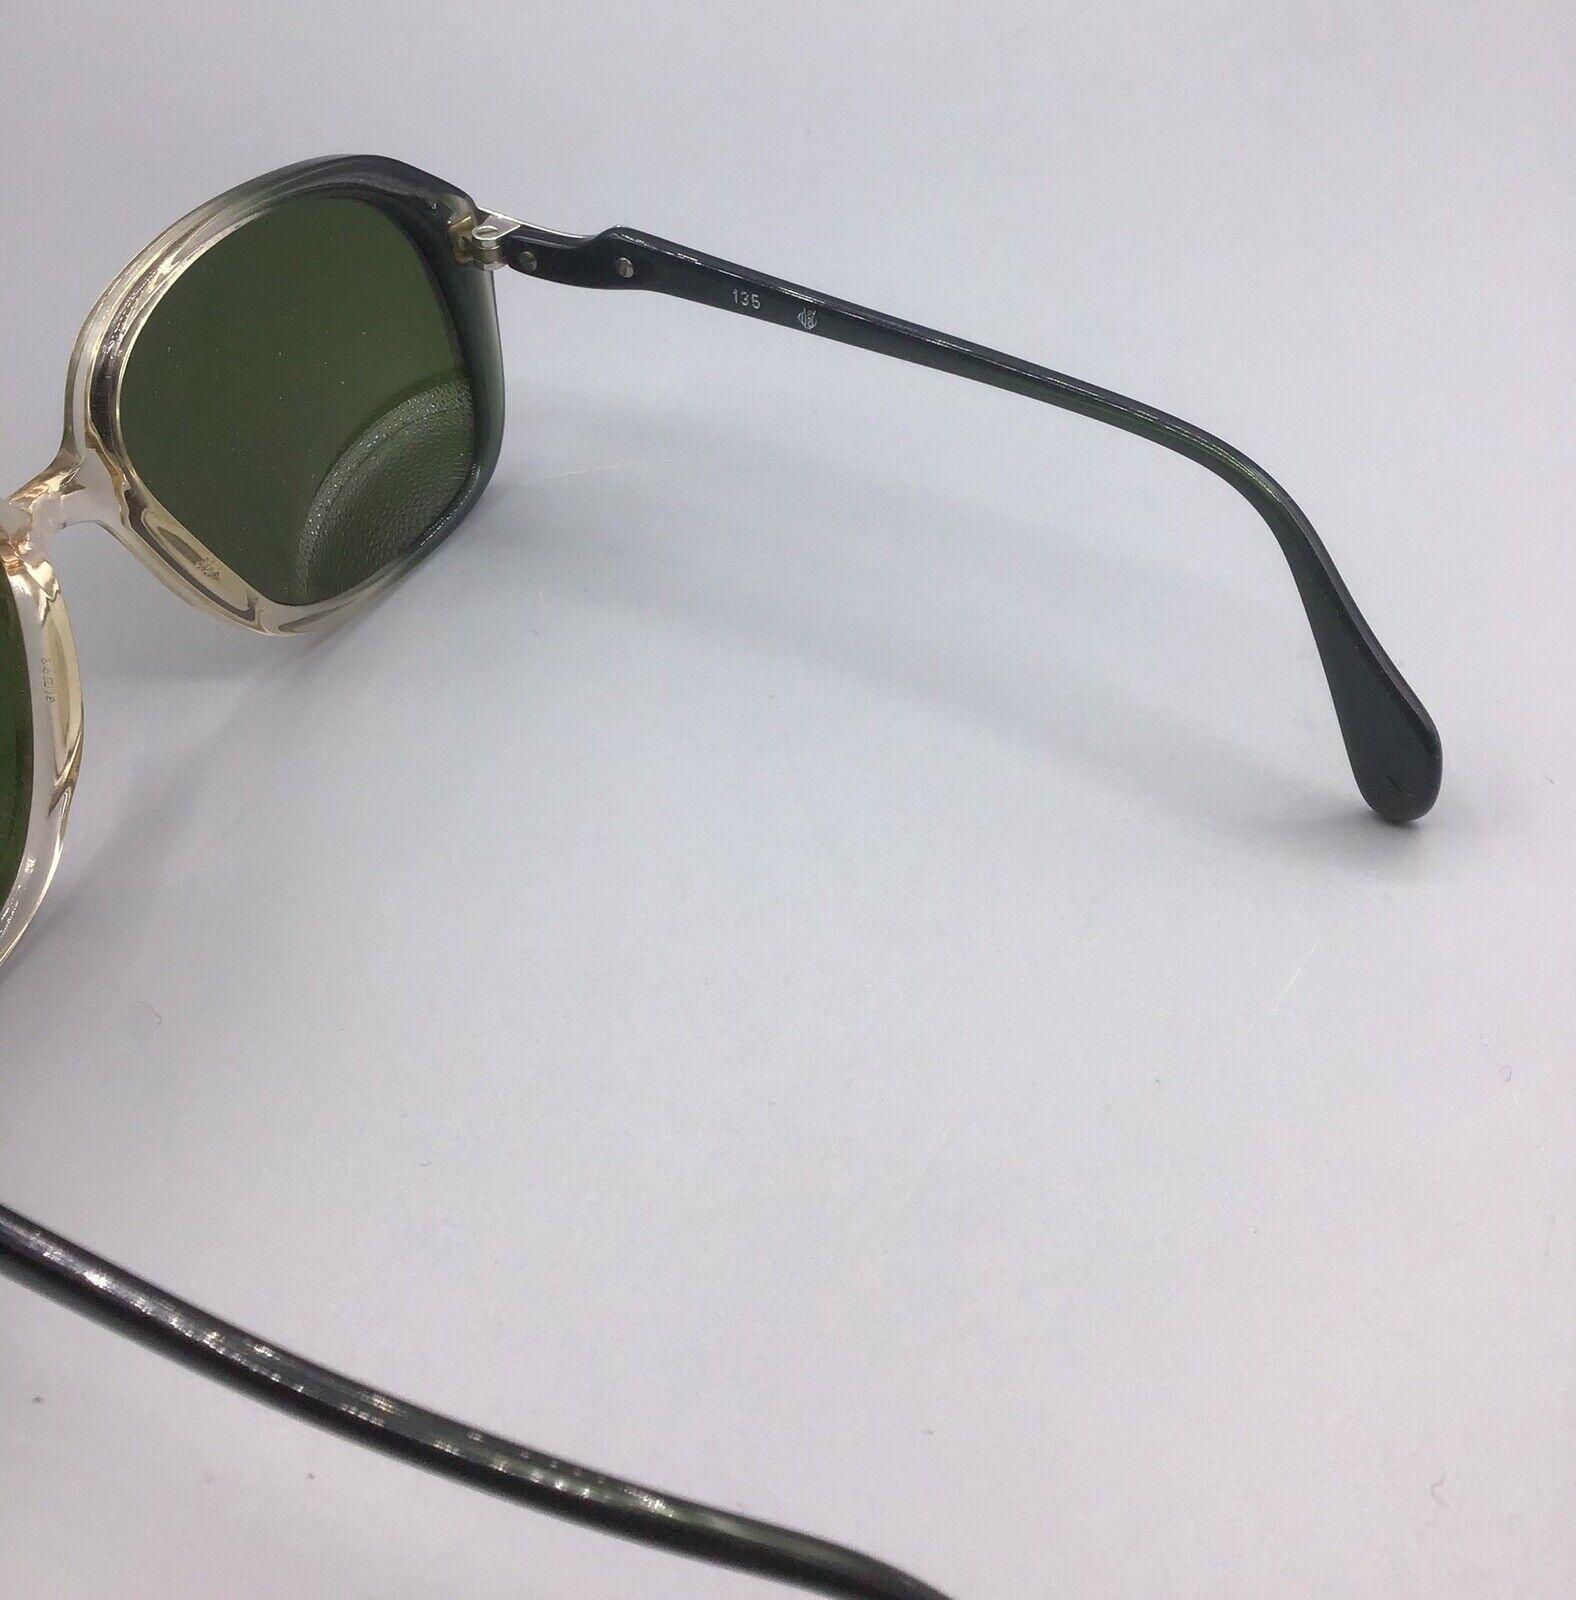 Metzler made in Germany 818 3130 occhiale da sole vintage sonnenbrillen sunglasses